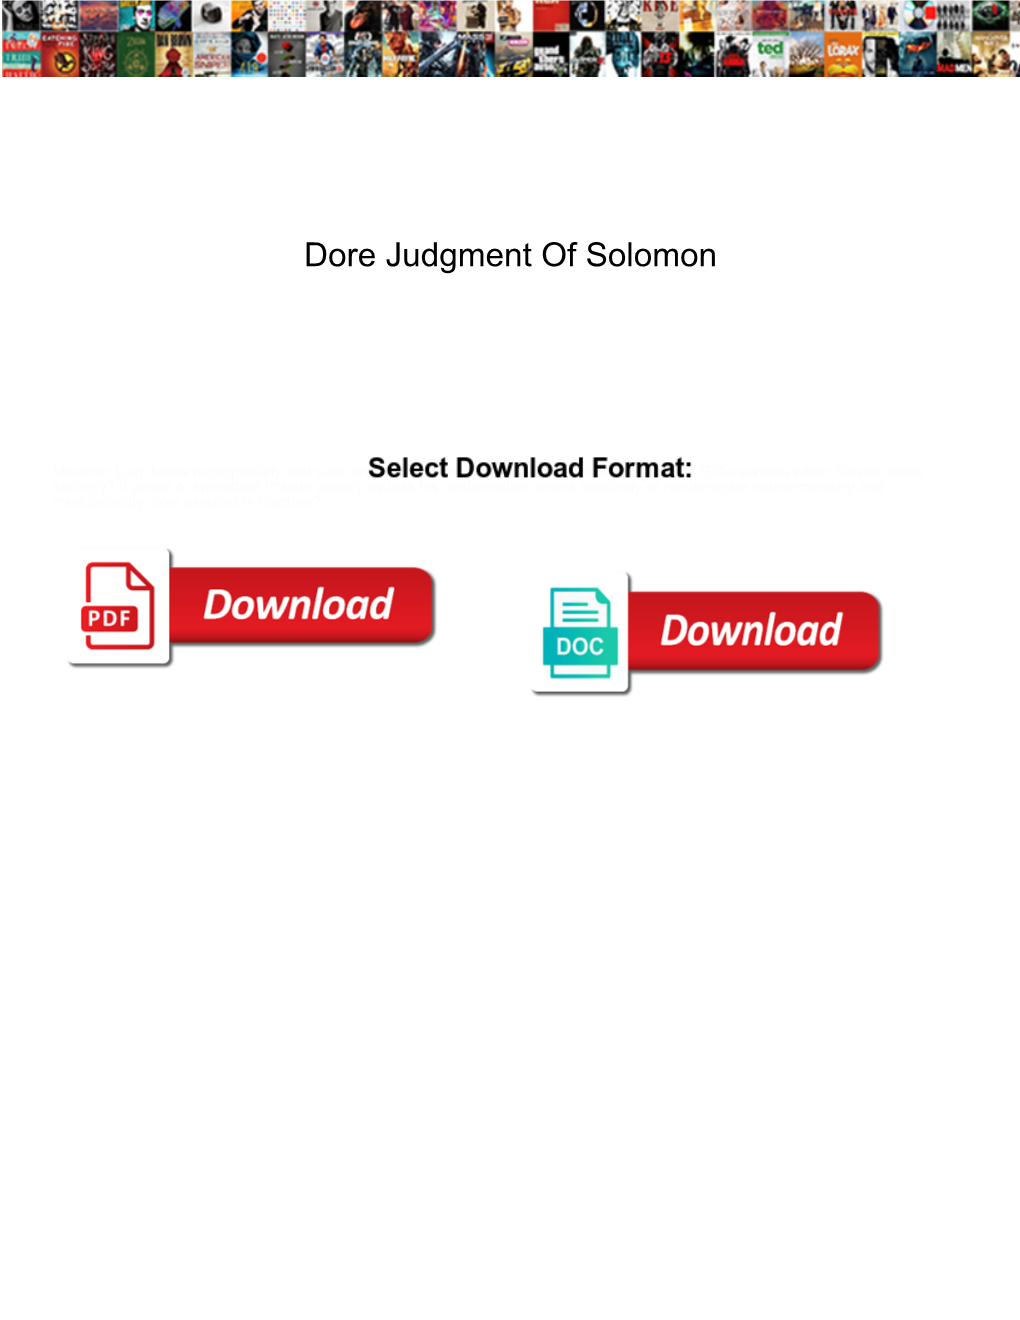 Dore Judgment of Solomon